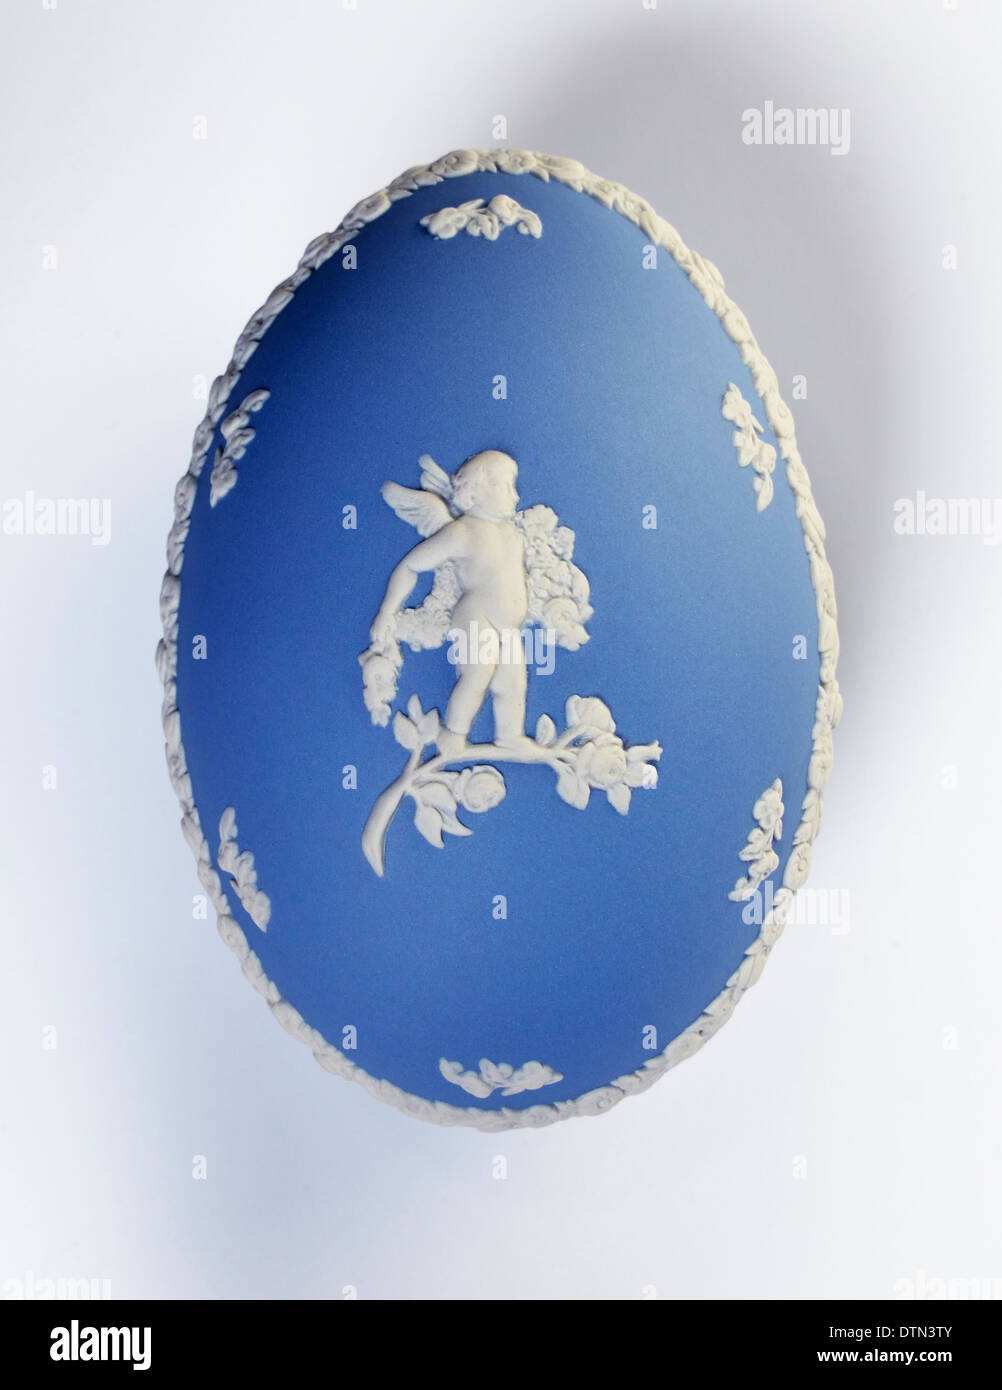 Wedgwood Blue Jasperware Egg-shaped Trinket Box. Stock Photo